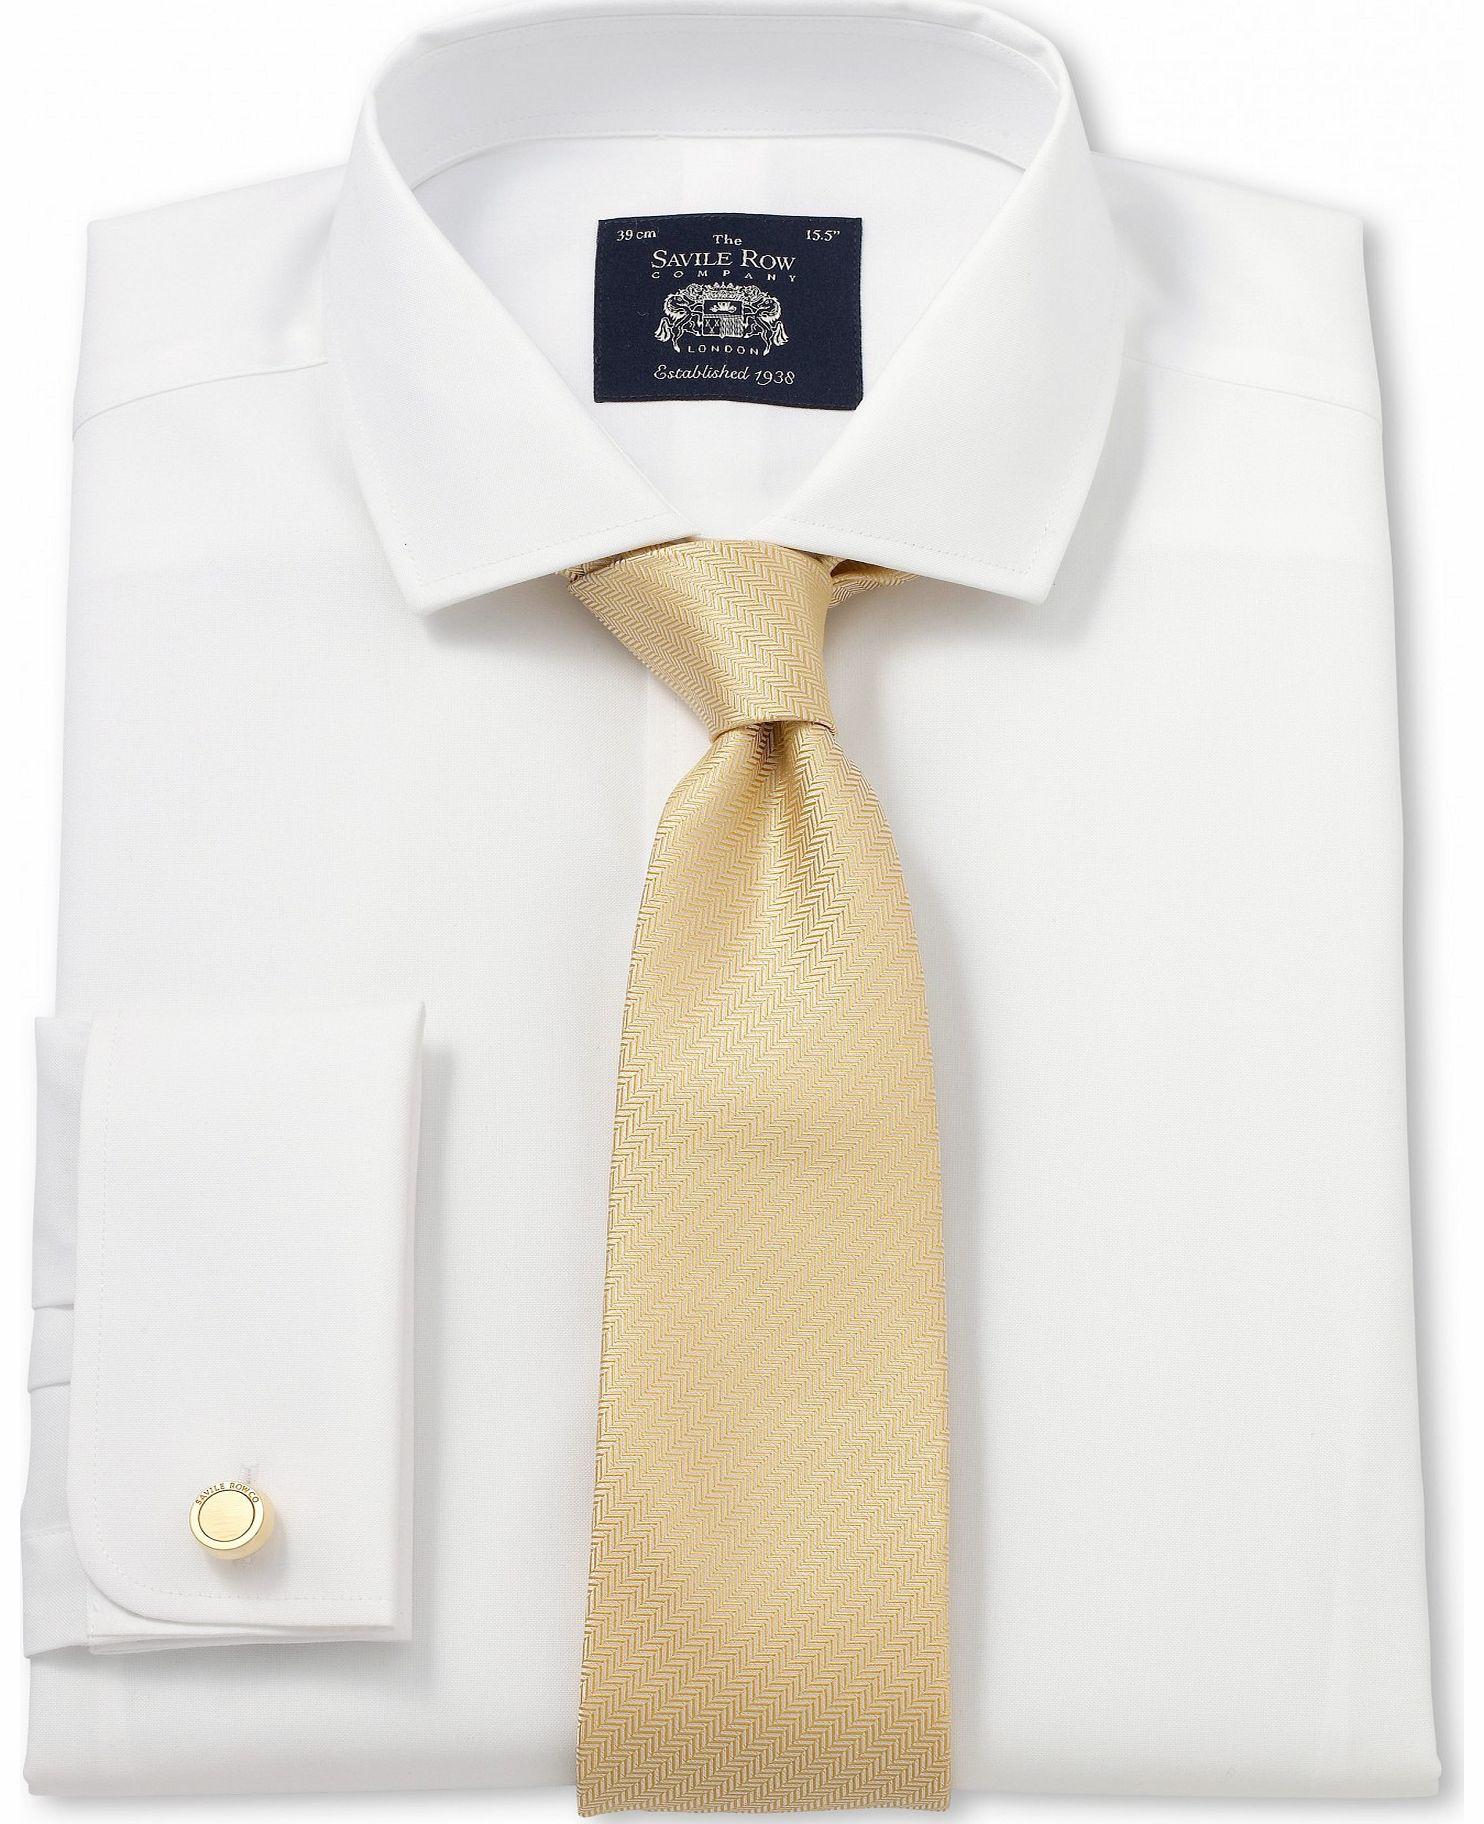 Savile Row Company White Poplin Non Iron Extra Slim Fit Shirt 17``